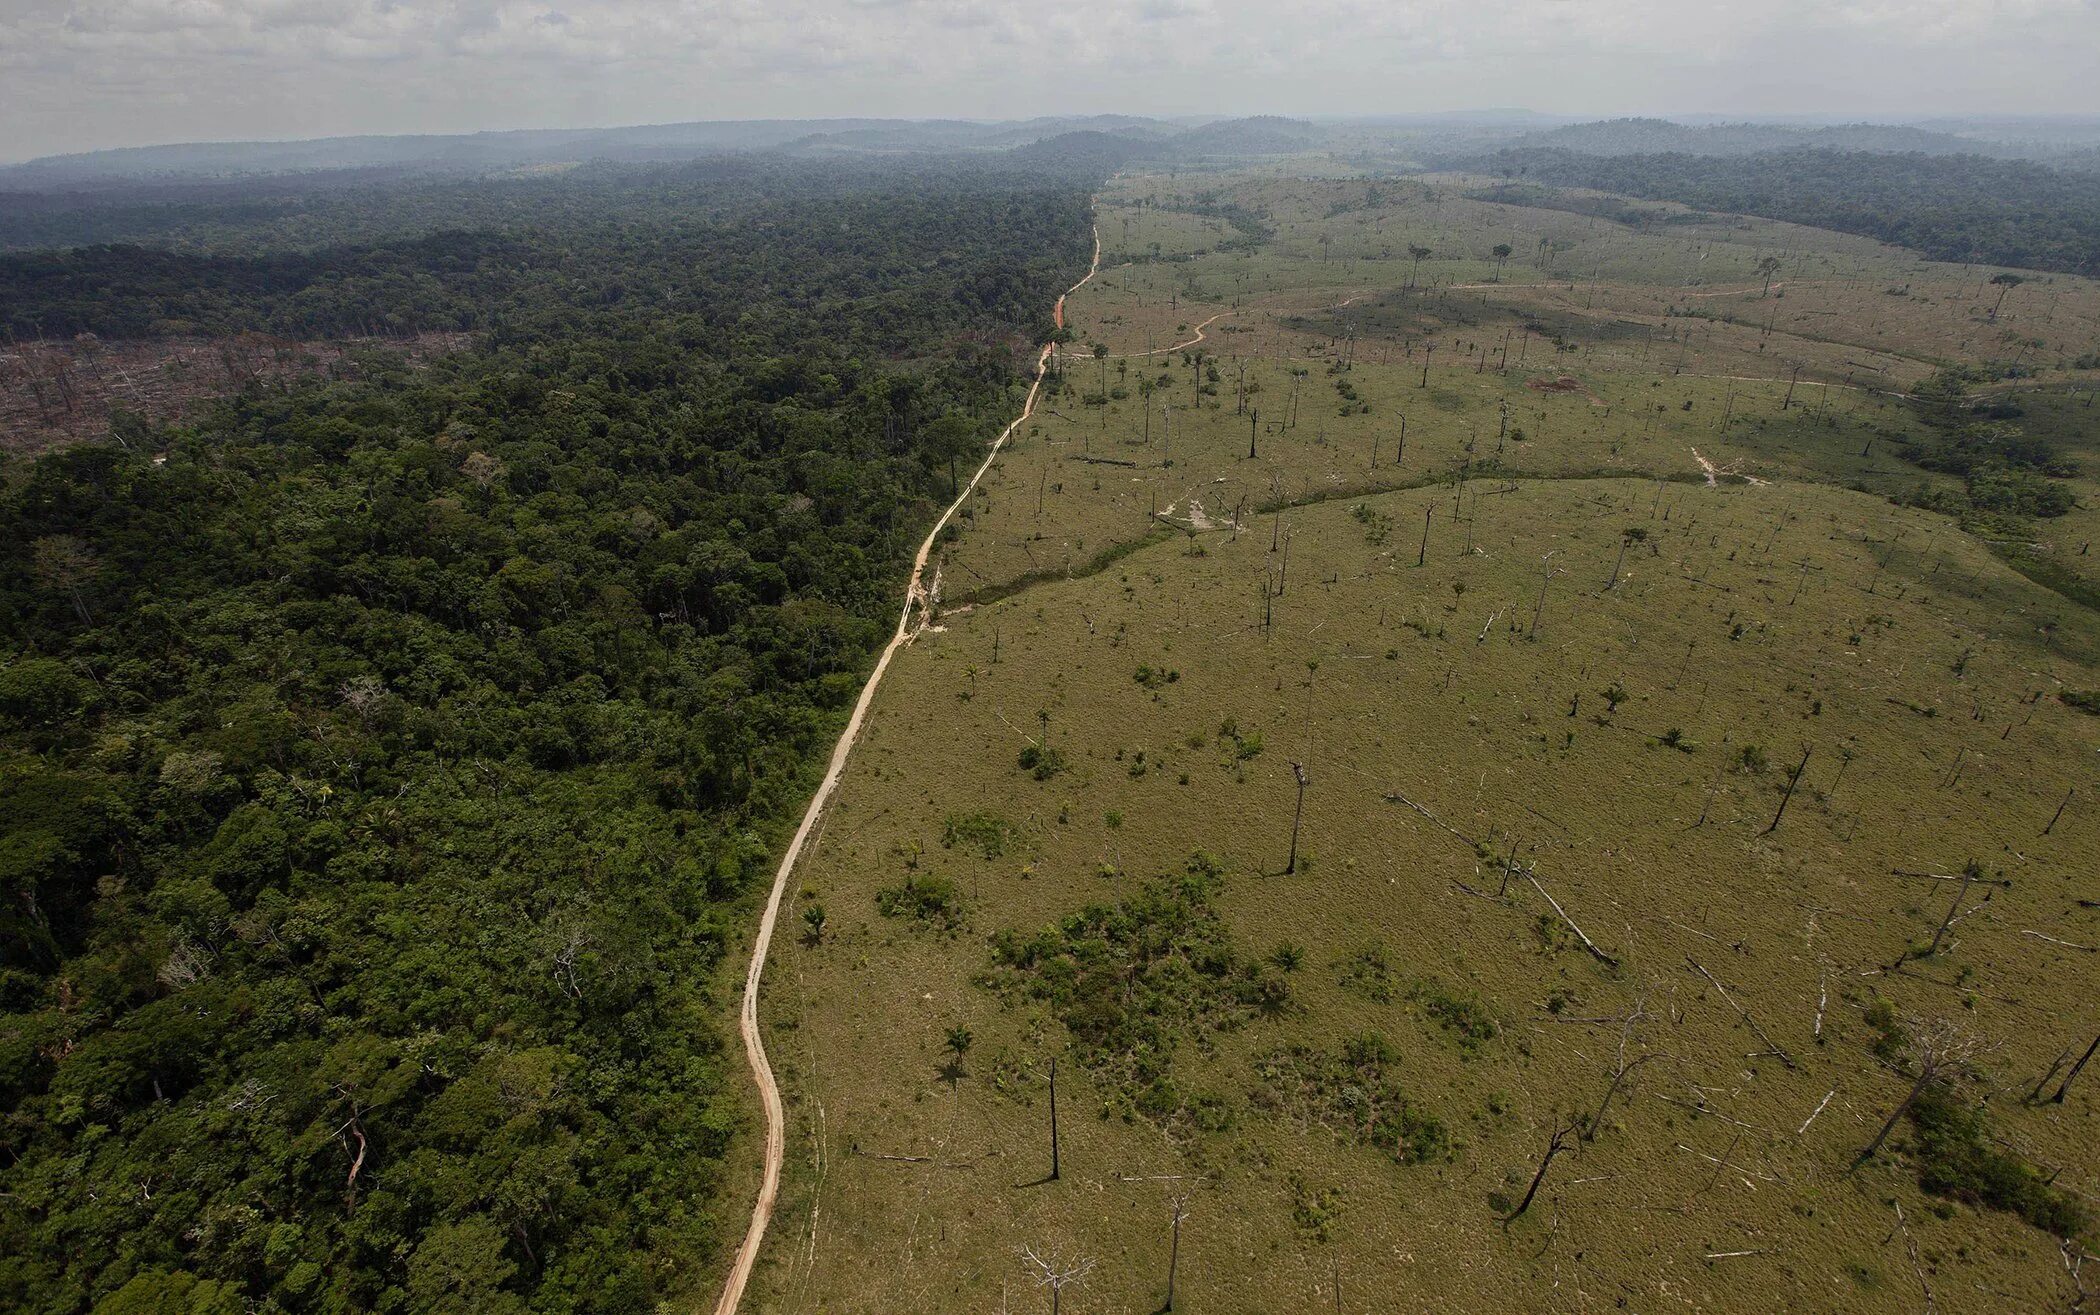 Amazon borneo congo. Вырубка леса в Амазонии. Обезлесение Бразилии. Вырубка лесов в Бразилии. Вырубка тропических лесов Амазонии.